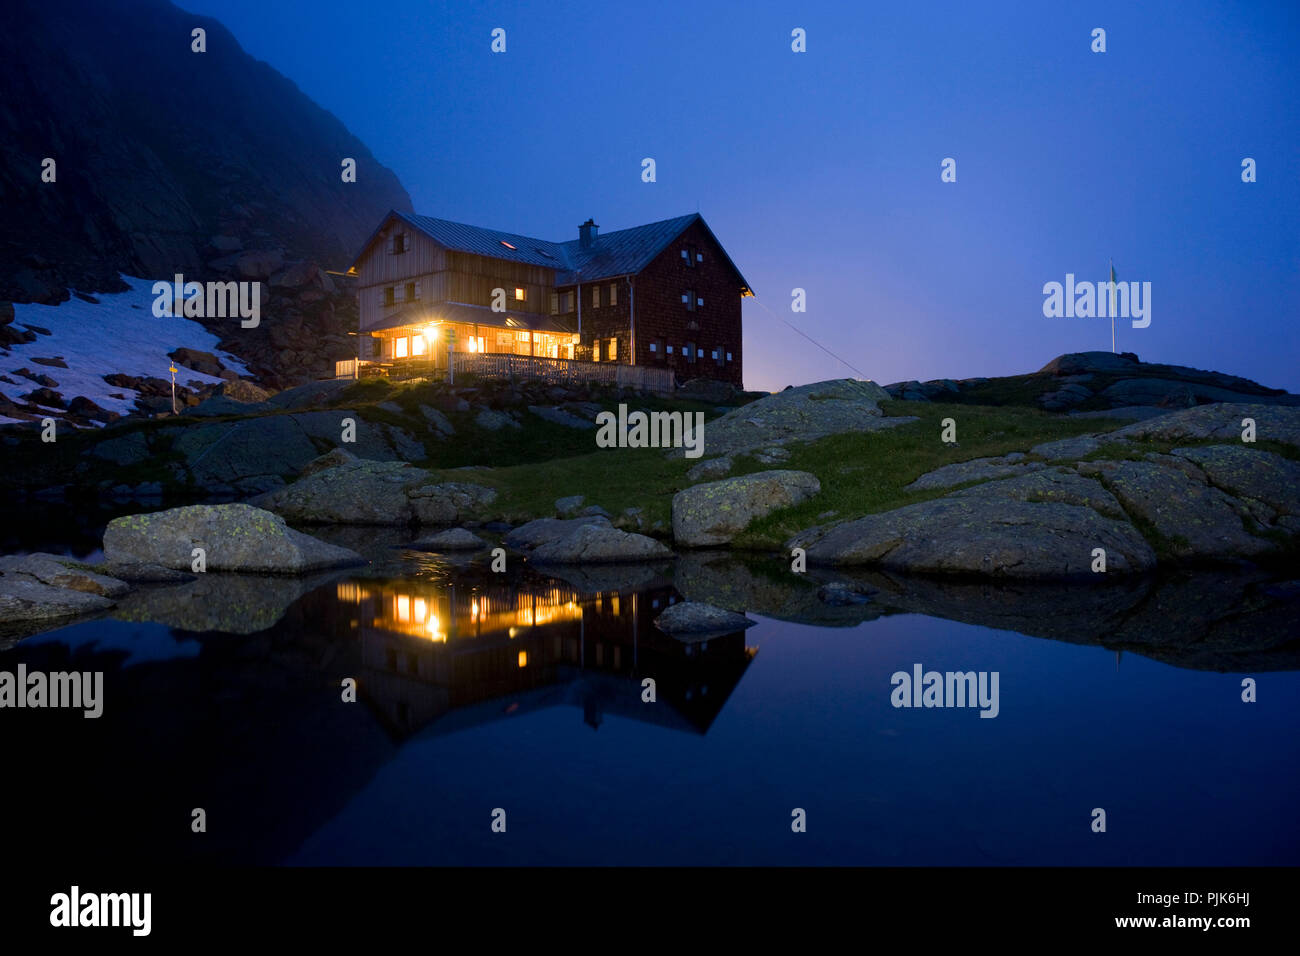 Bremer hut, Stubai Alps, Tyrol, Austria. Stock Photo